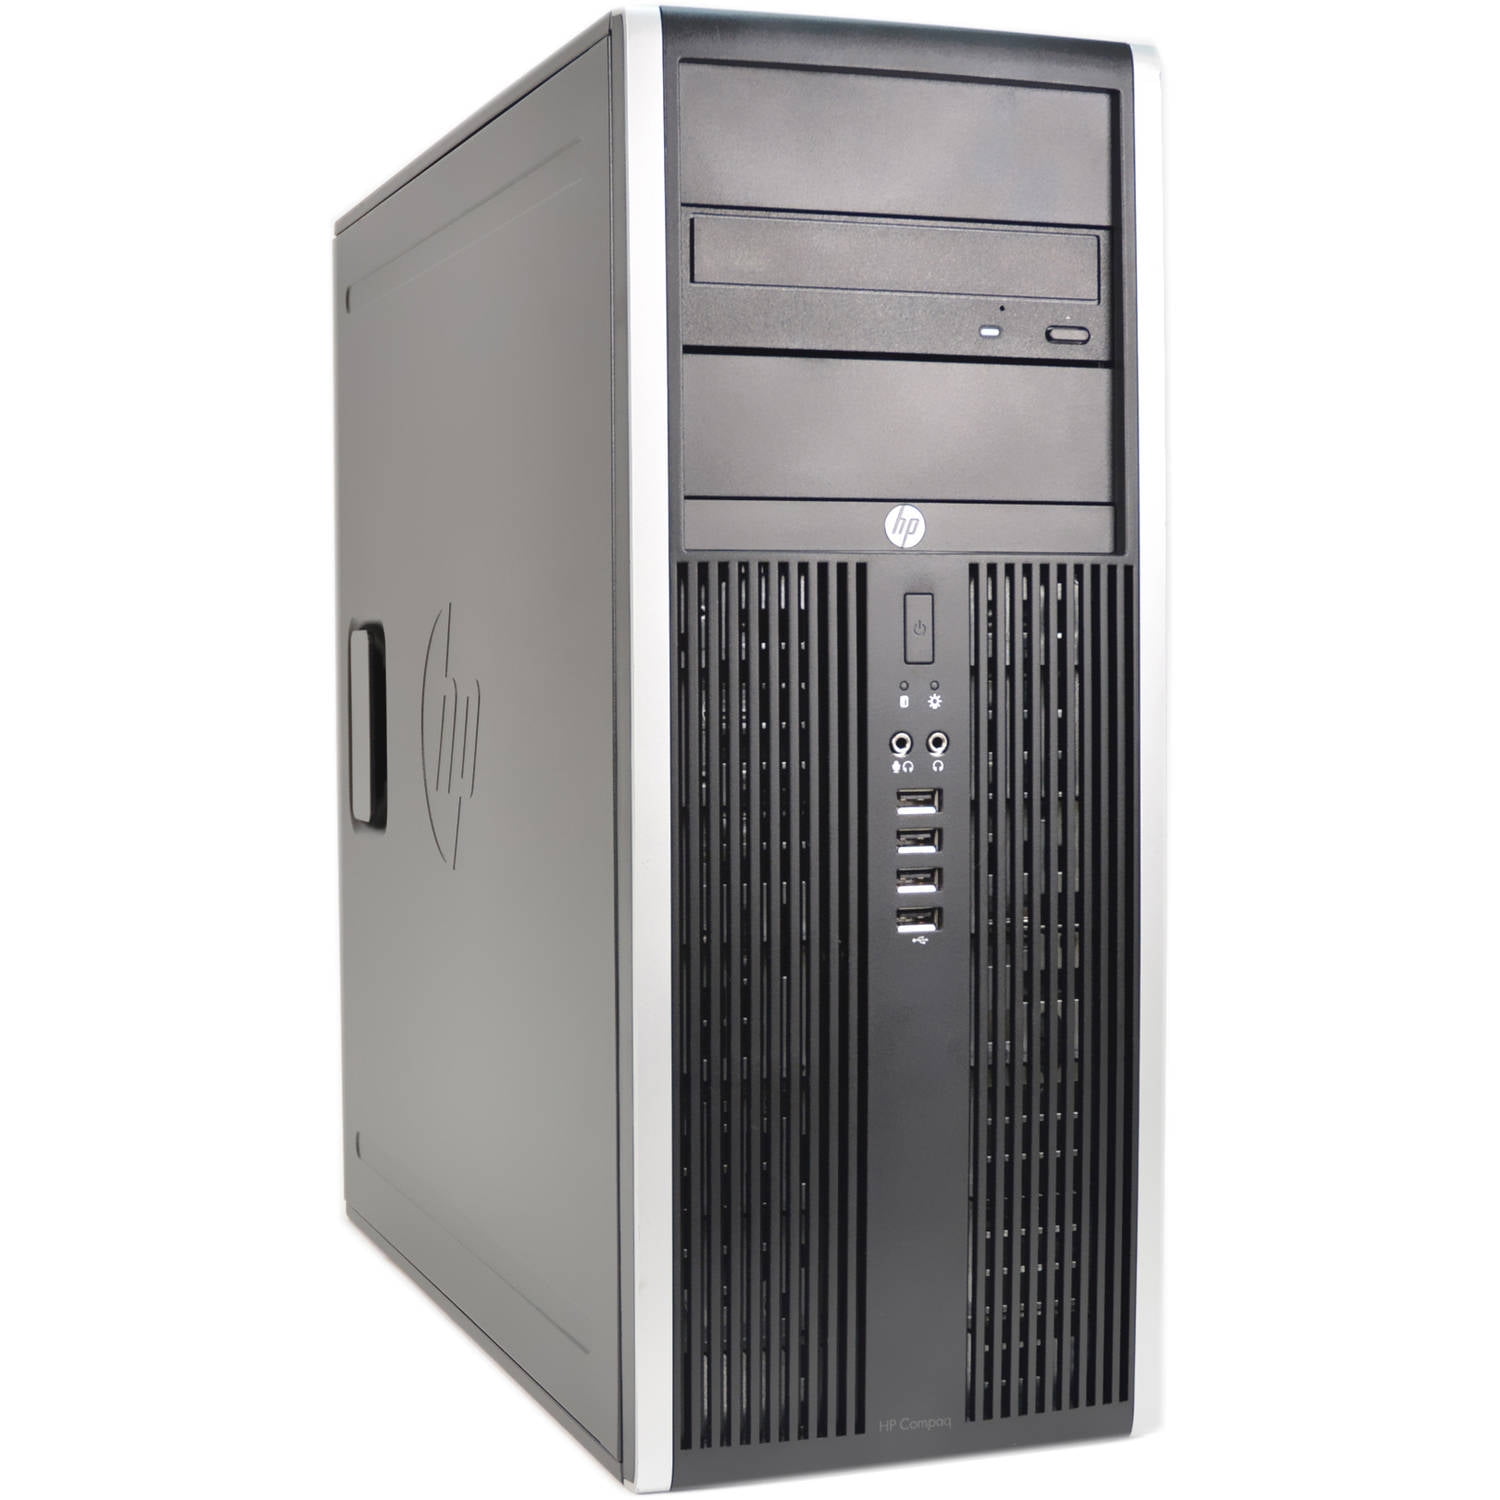 16GB RAM HP 8300 Tower Certified Refurbished 2000GB Hard Drive Core i7-3770 3.4GHz Windows 10 Pro 64bit DVDRW 